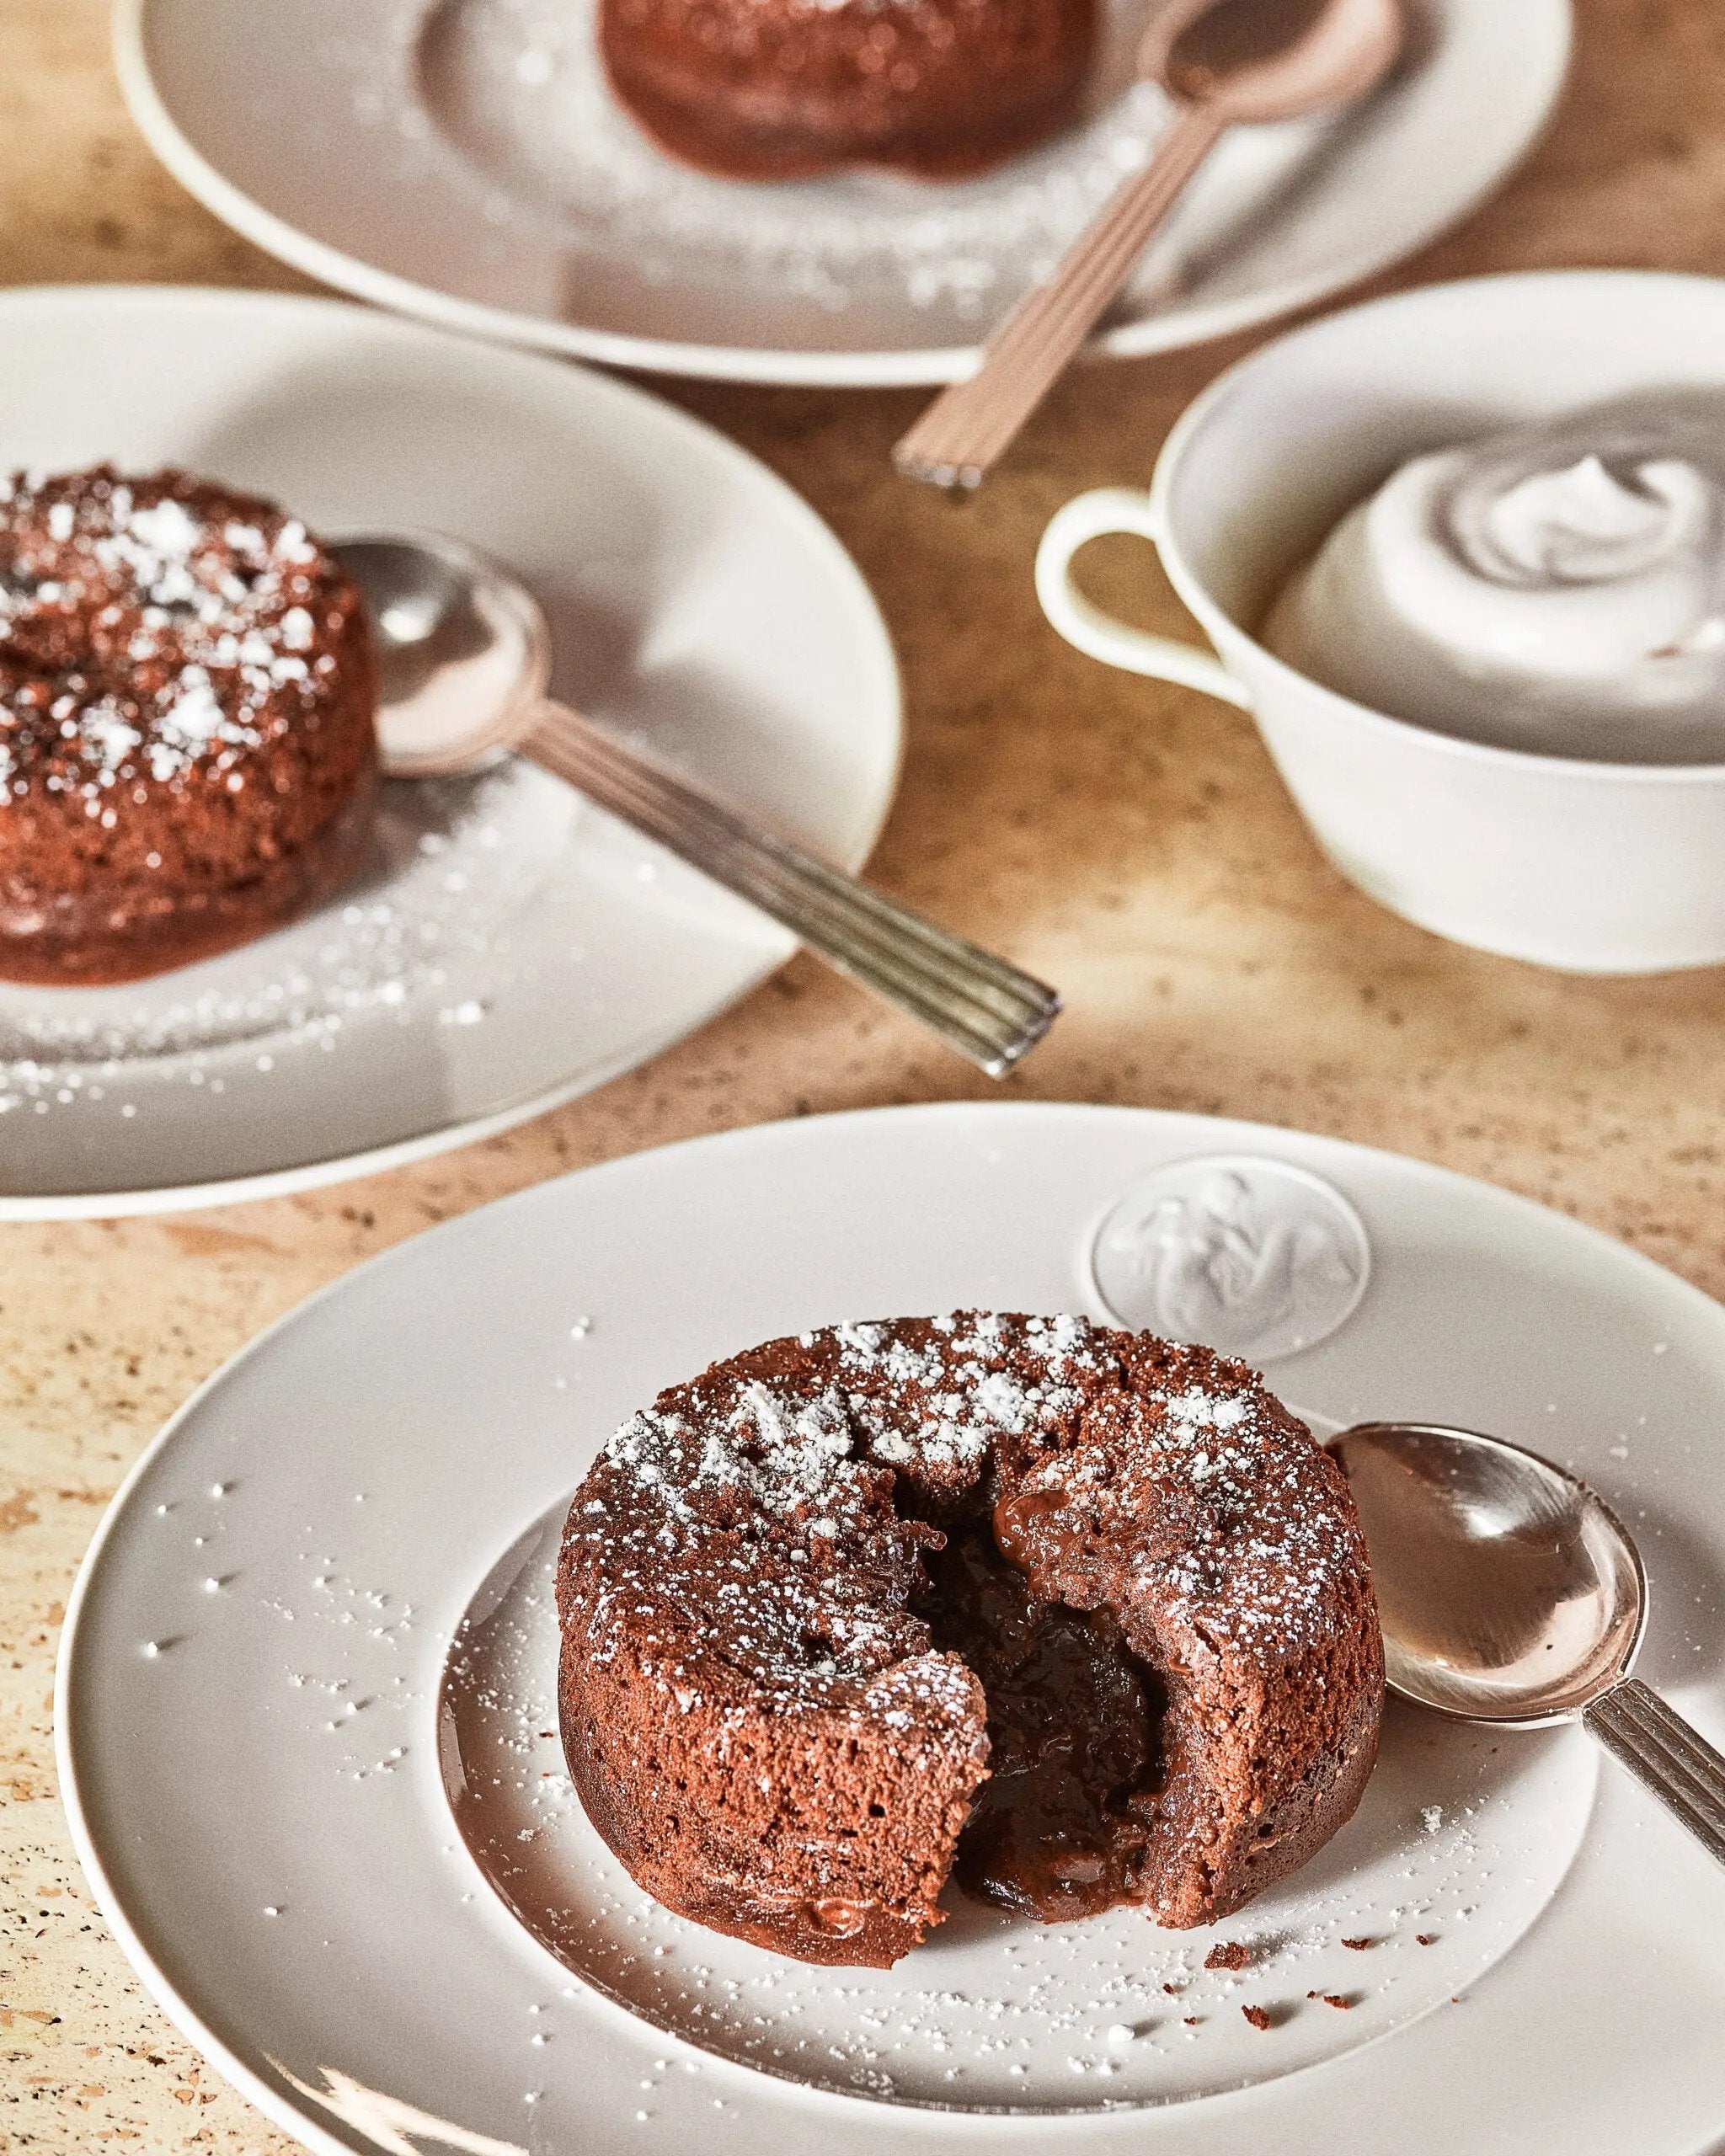 Chocolate strawberry cake Recipe by Basna Bidisha Bal - Cookpad